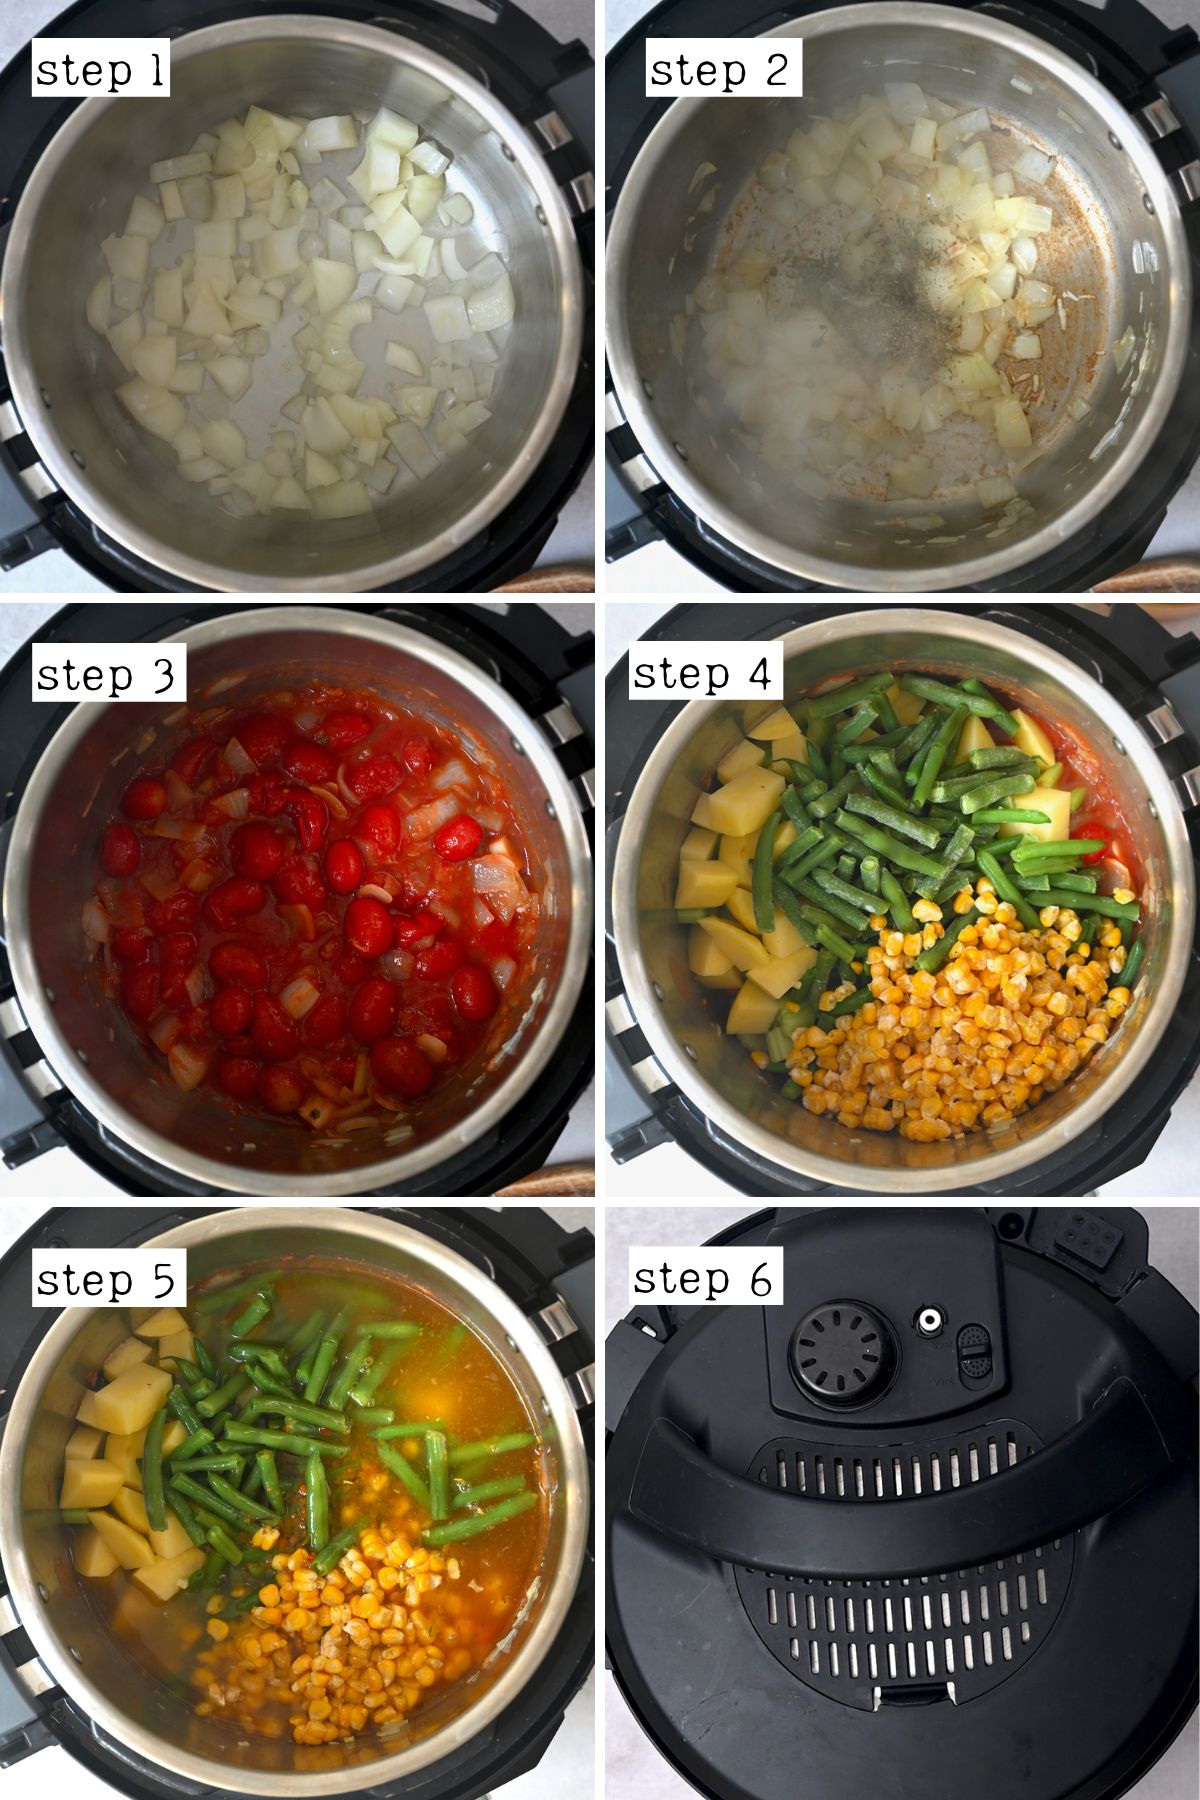 Steps for preparing vegetable soup